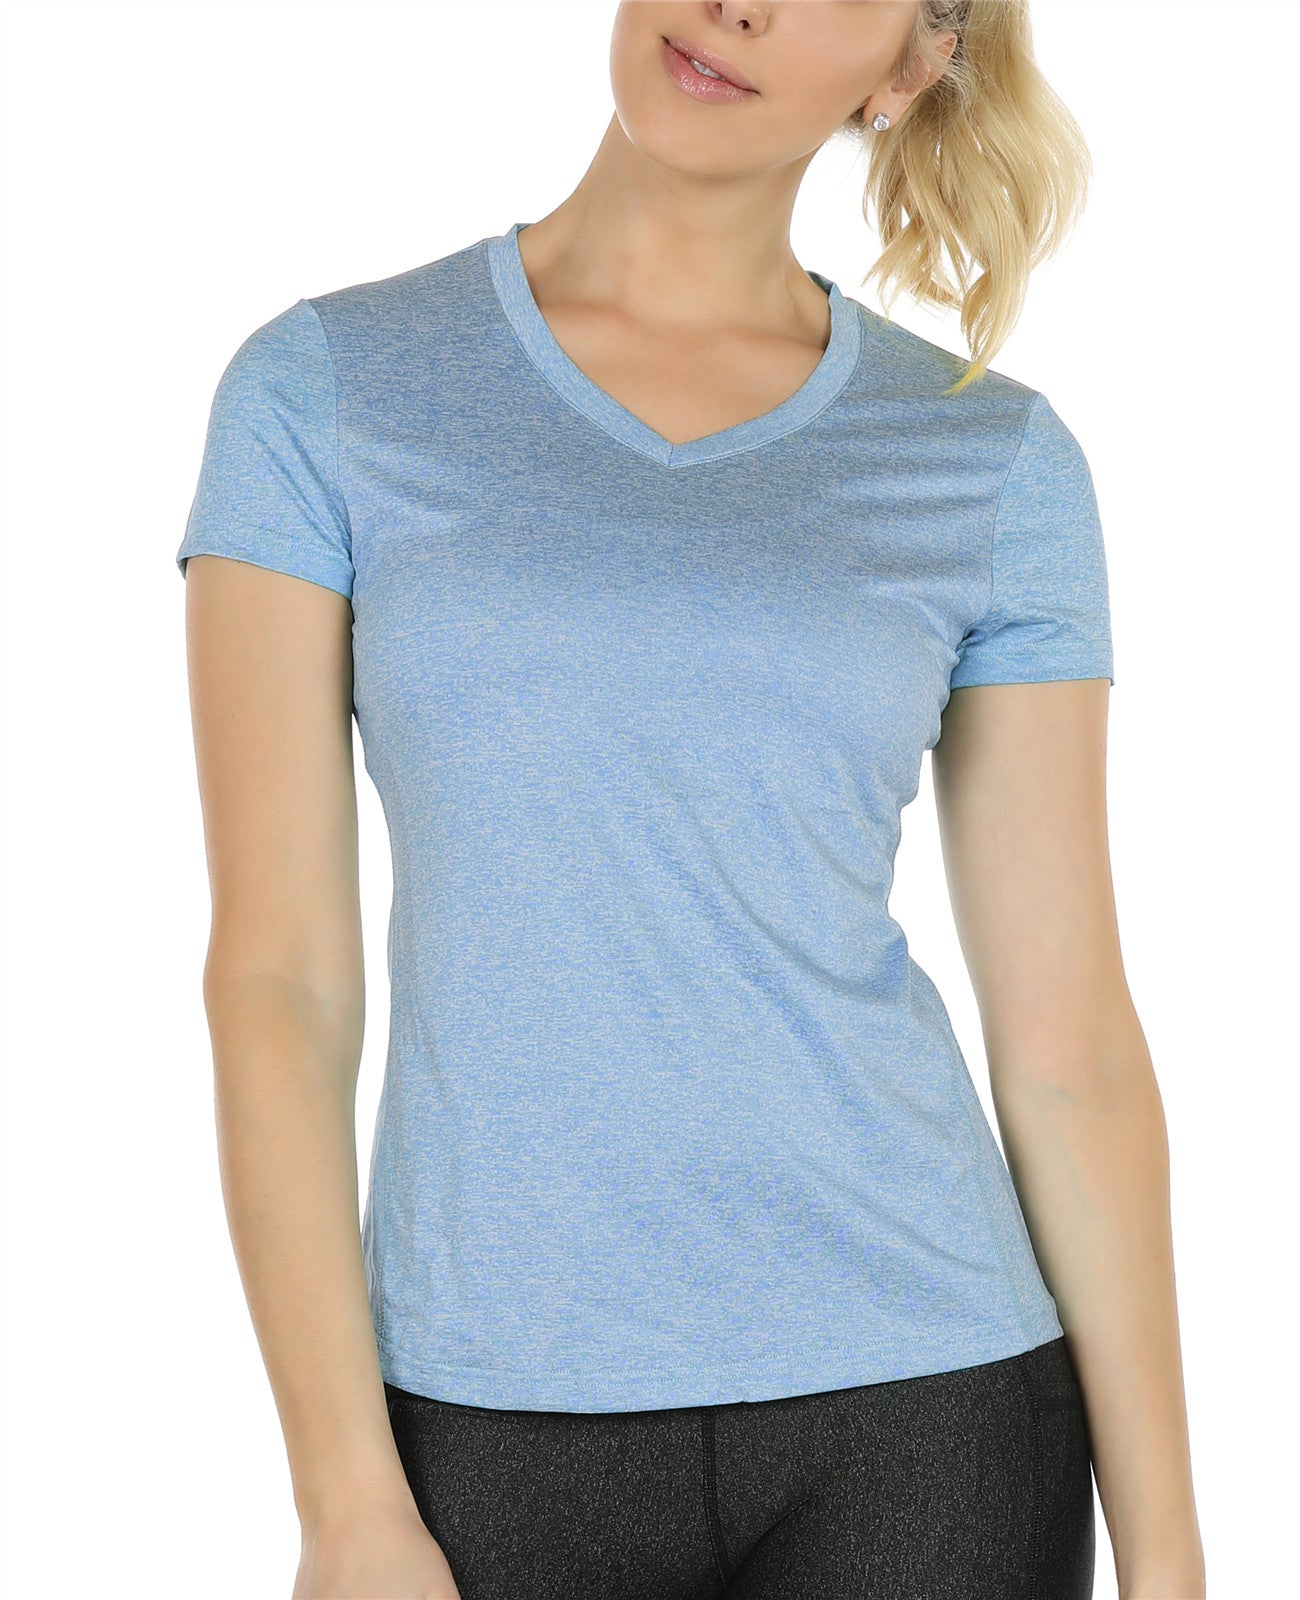 Women's Workout Shirts & Gym Tops